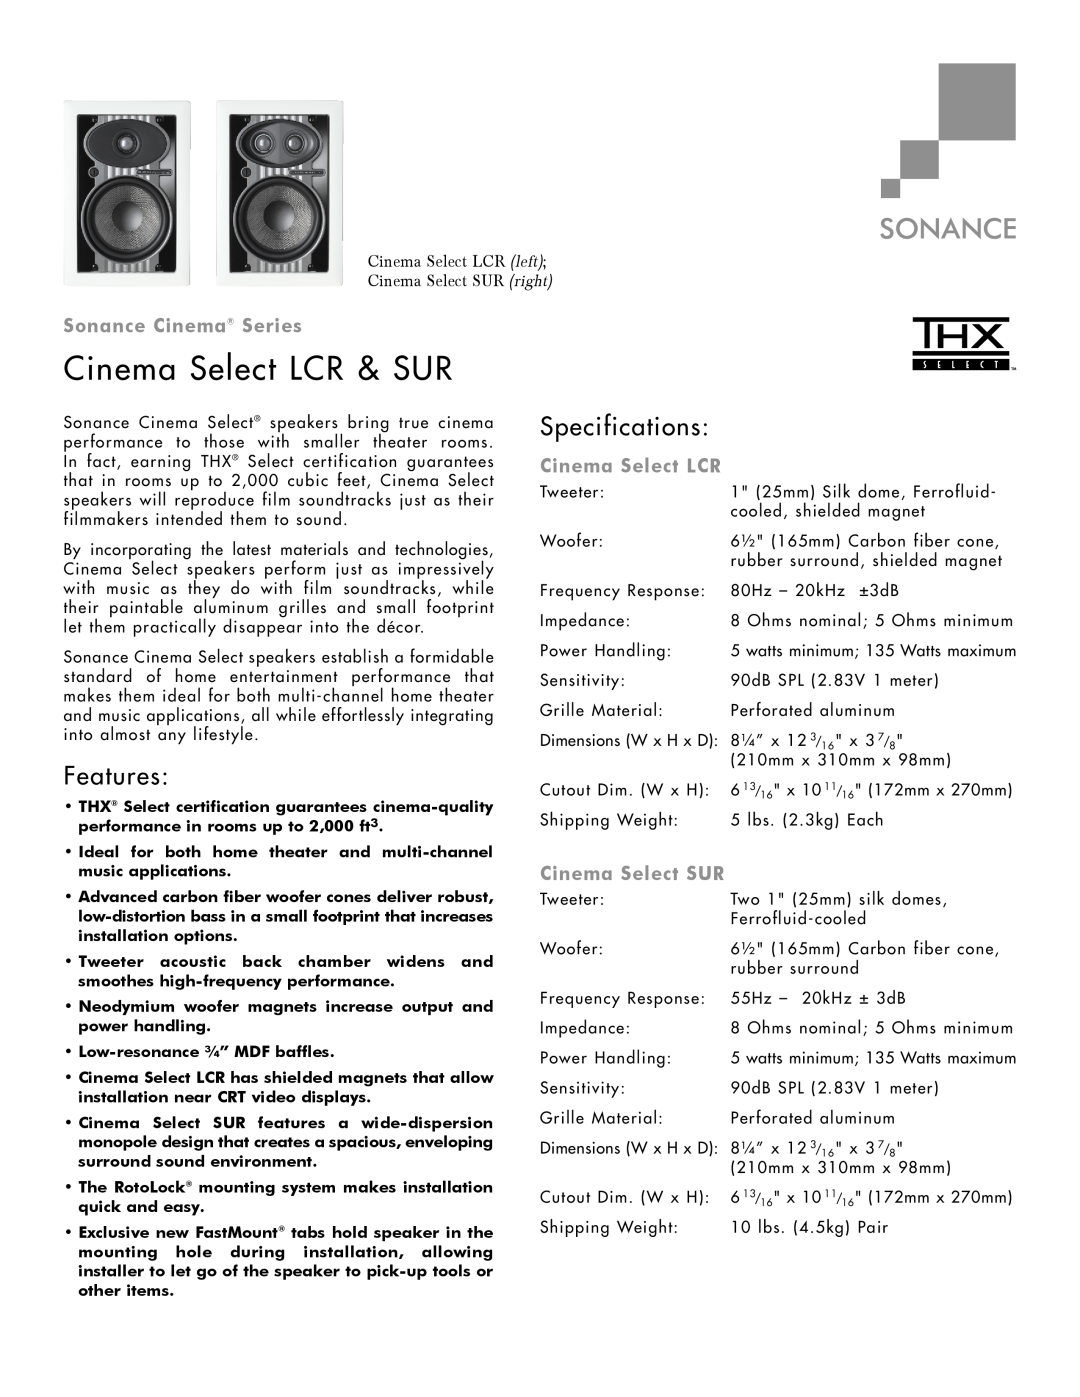 Sonance LCR & SUR Speaker specifications Cinema Select LCR & SUR, Features, Specifications, Sonance Cinema Series 